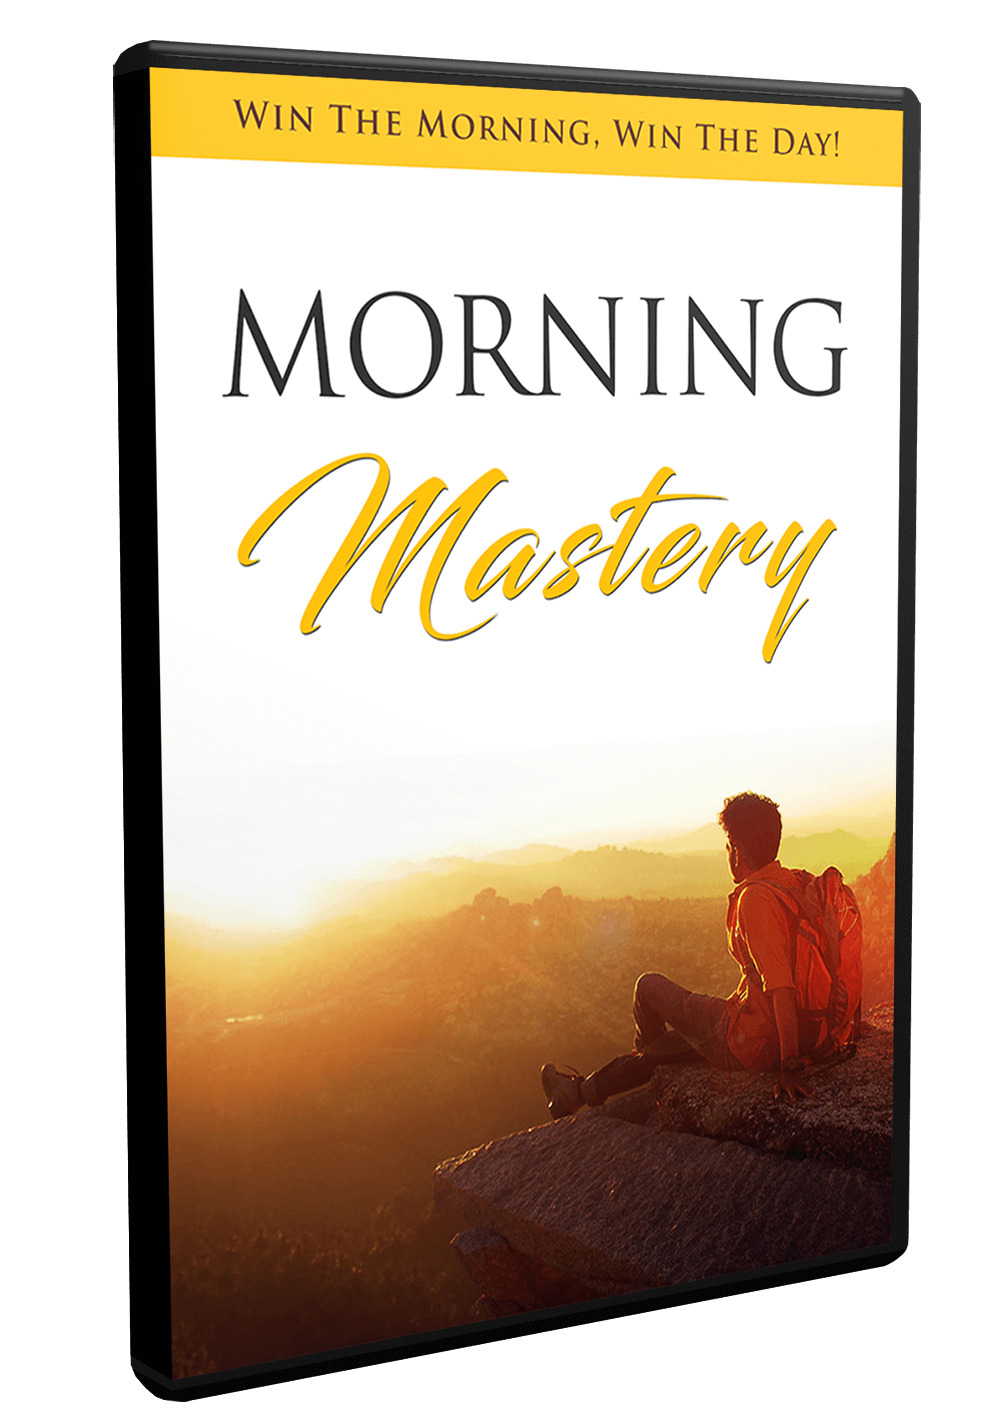 Morning Mastery